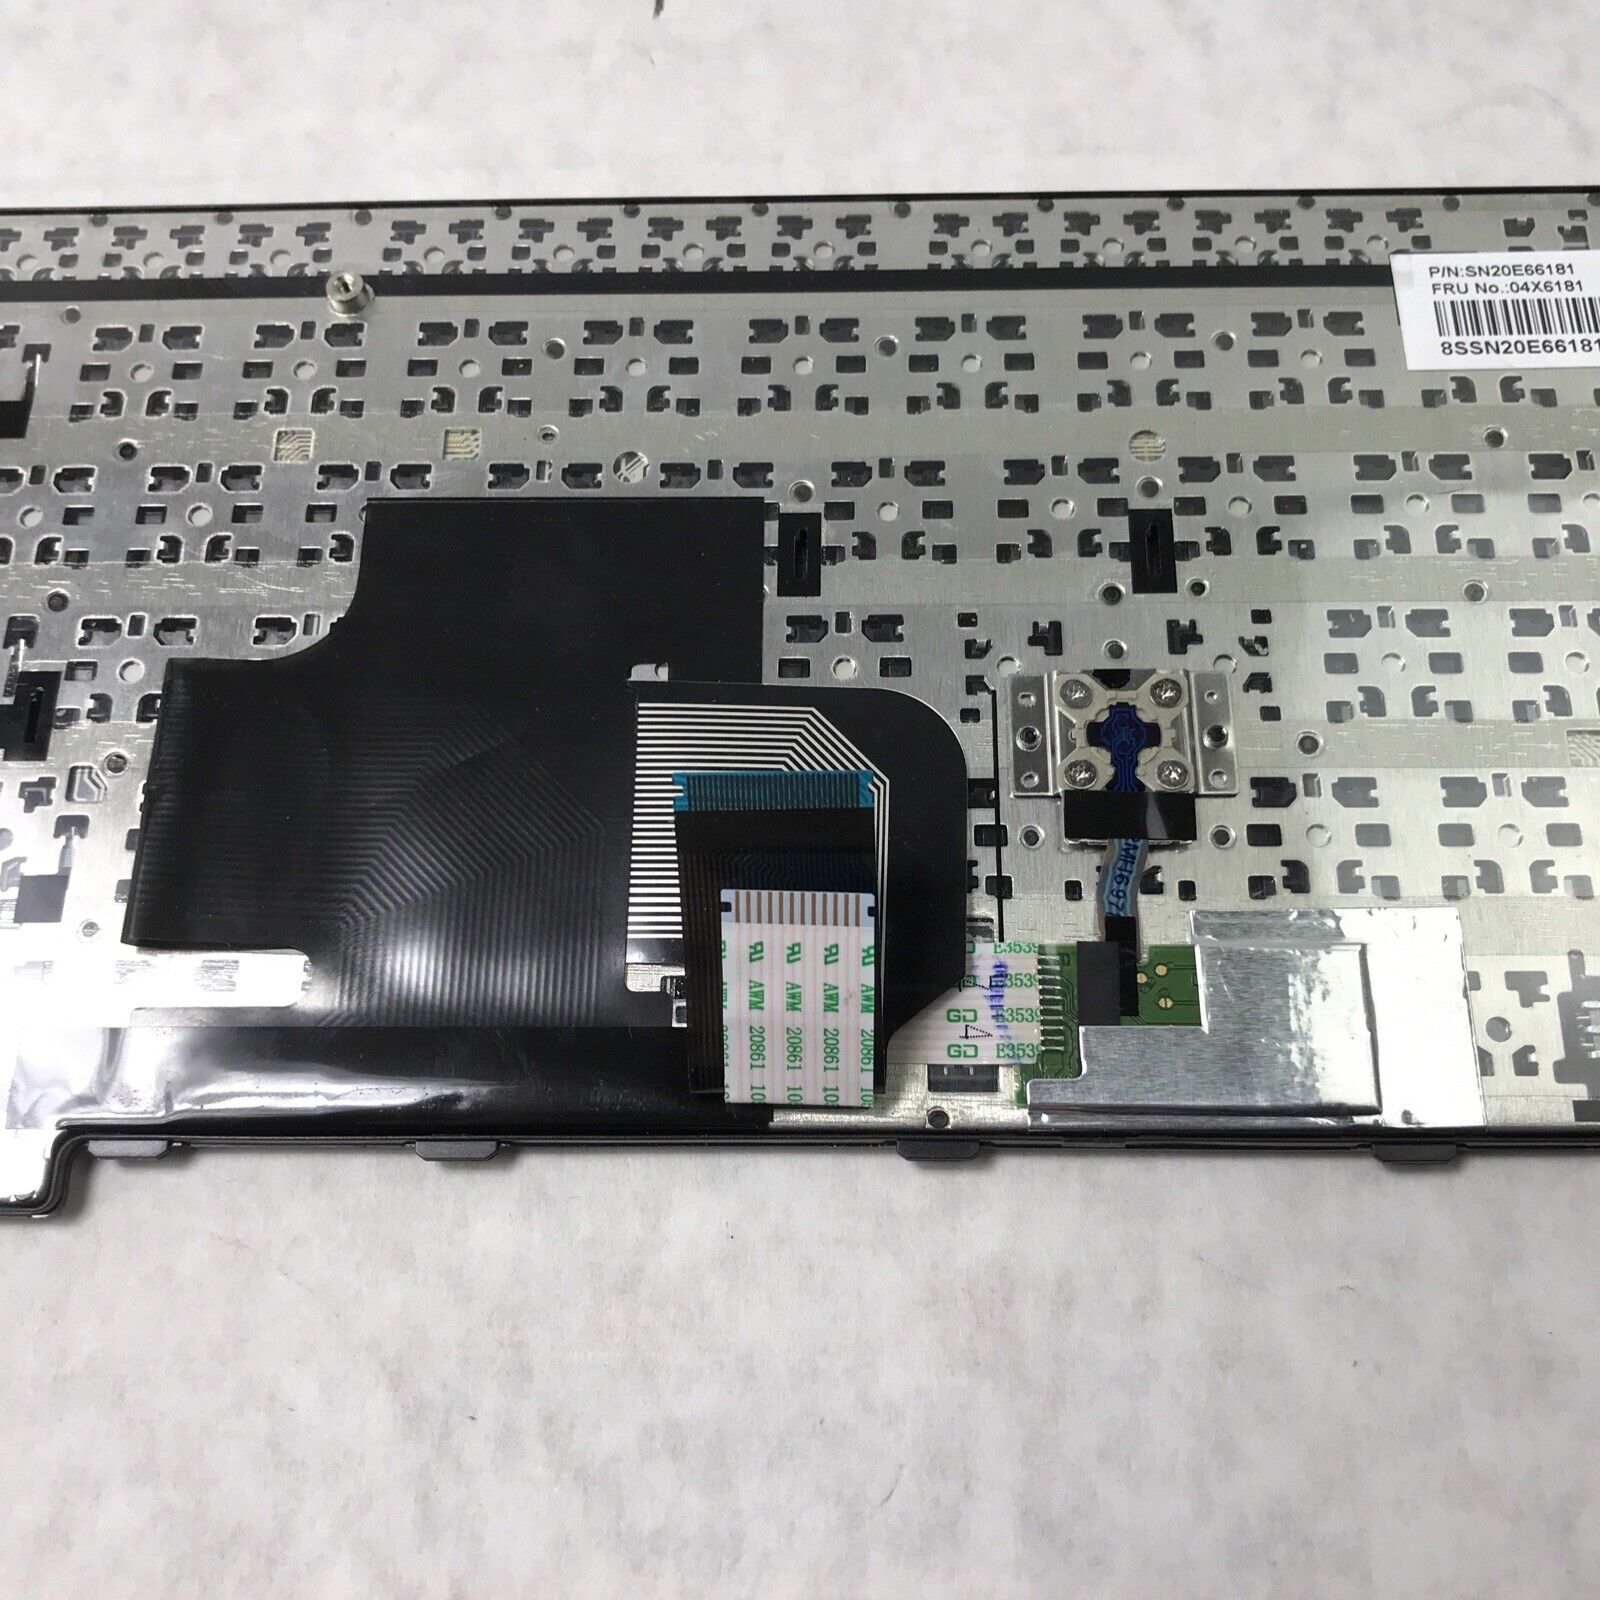 Lenovo ThinkPad E460 Keyboard (Tested Working)